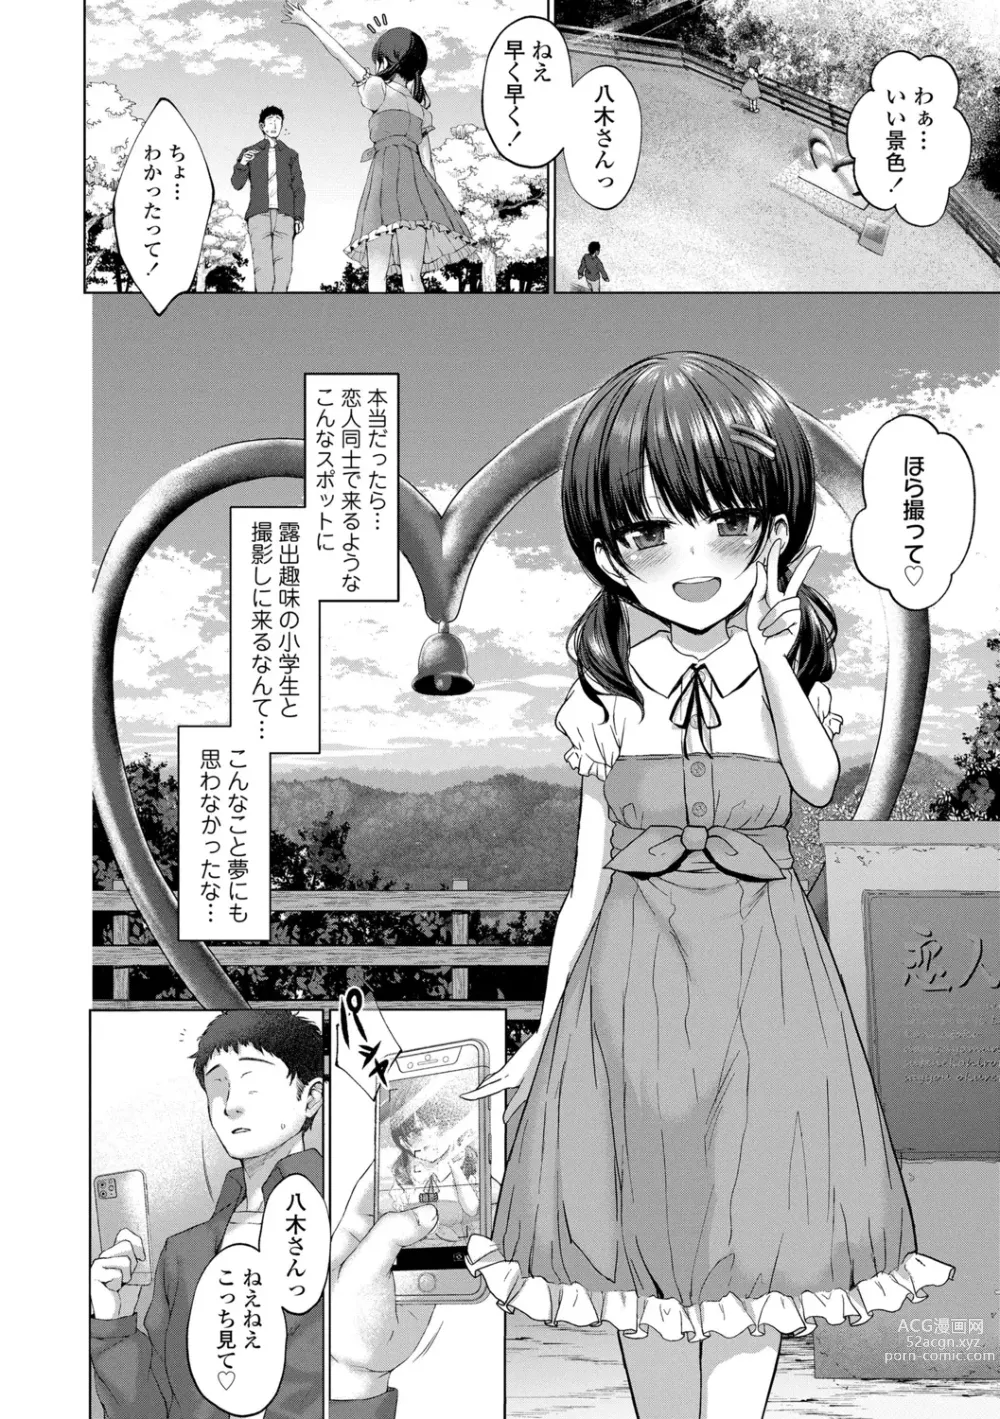 Page 10 of manga Akuma mitai ni kimi wa tatteta